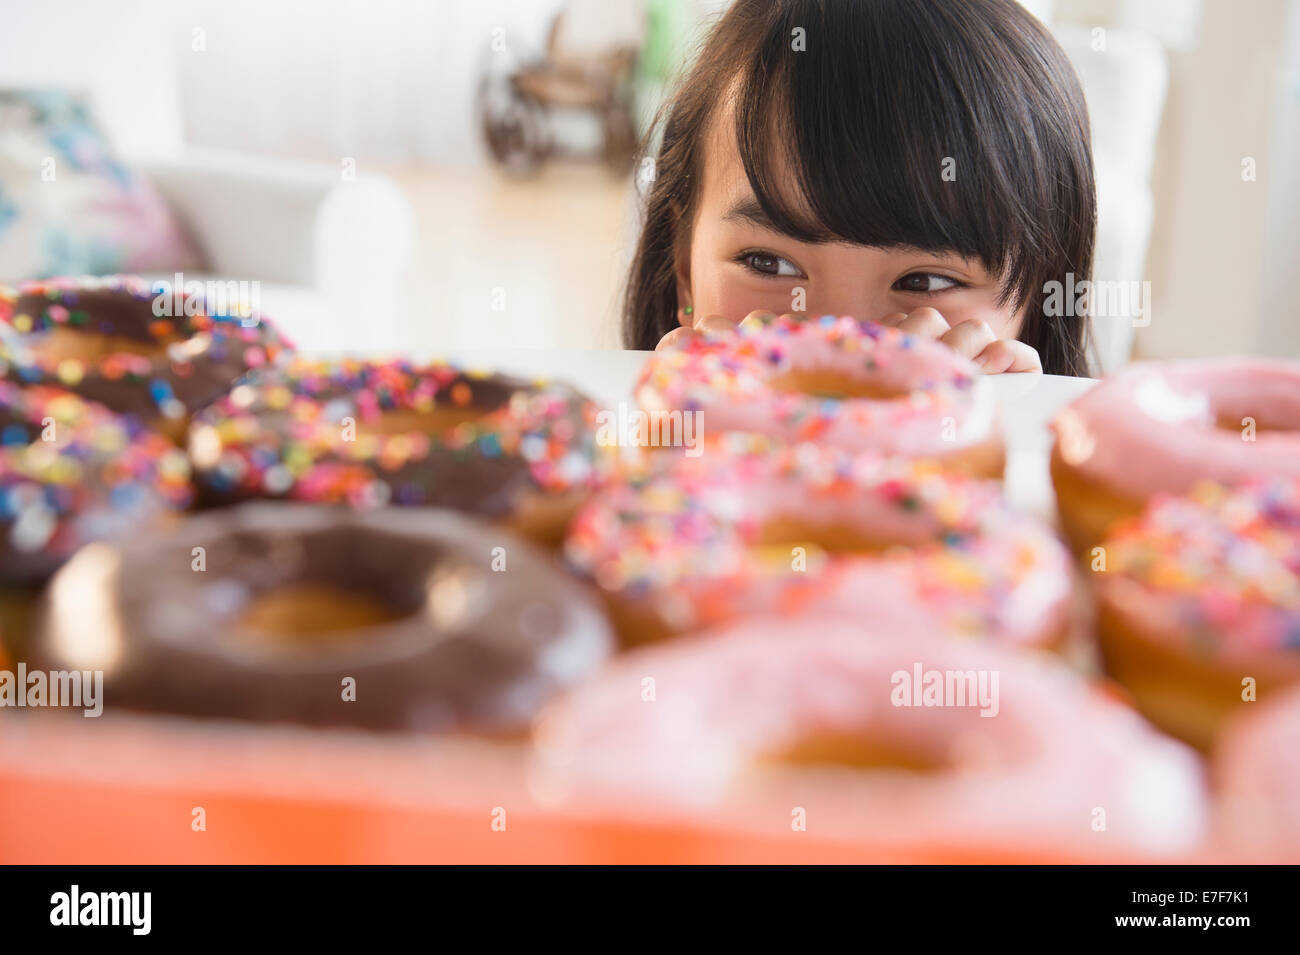 Filipino girl peering at donuts on table Stock Photo